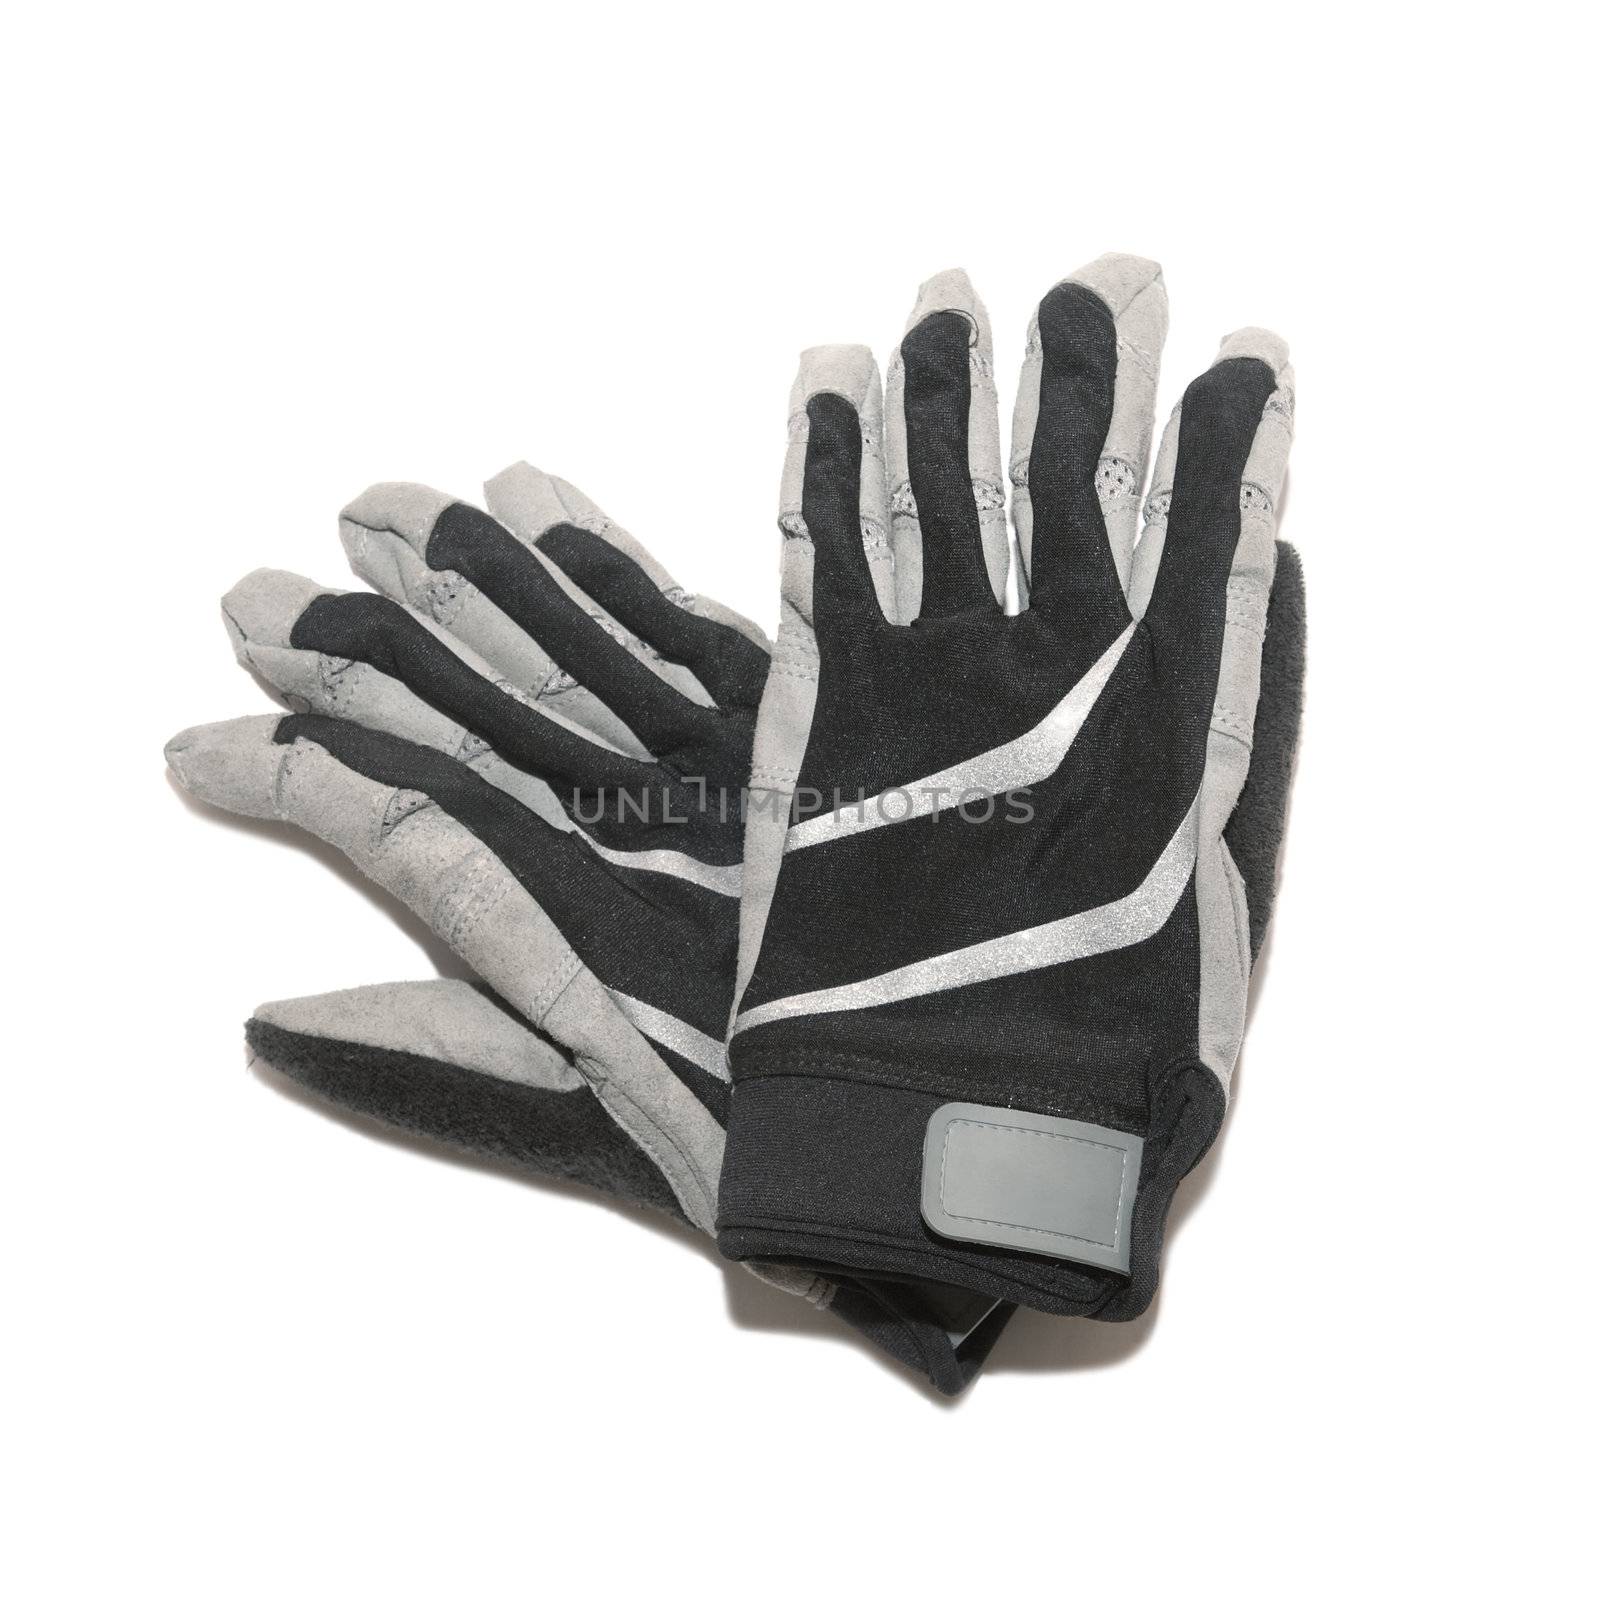 Gray and black ski gloves isolated over white